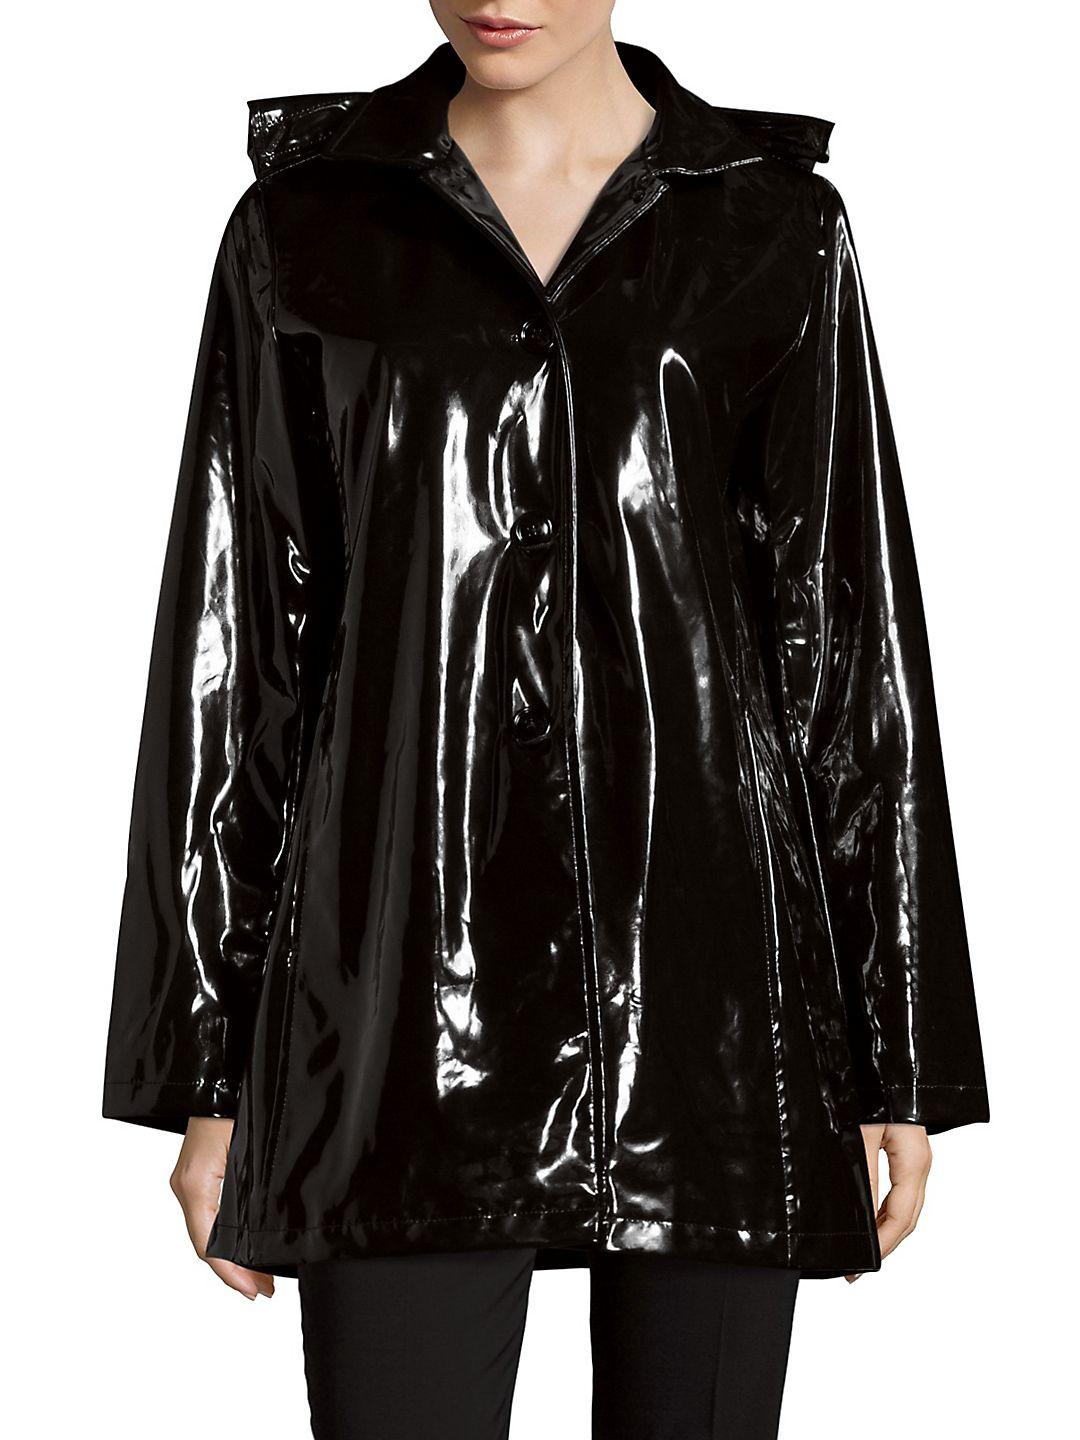 Jane Post Princess Raincoat With Detachable Hood in Black | Lyst